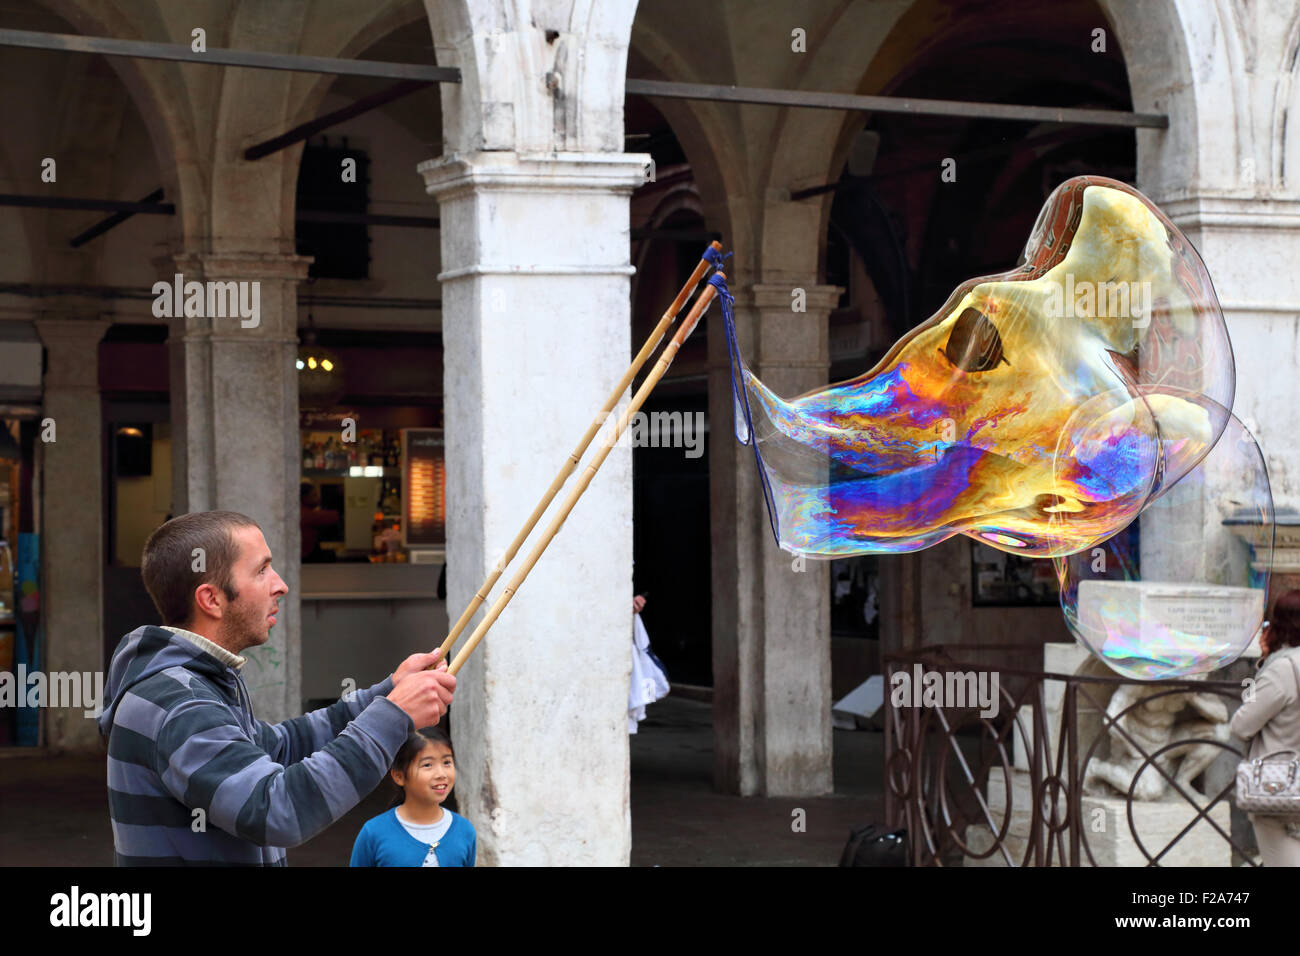 Soap bubble street artist performance in Venice Stock Photo